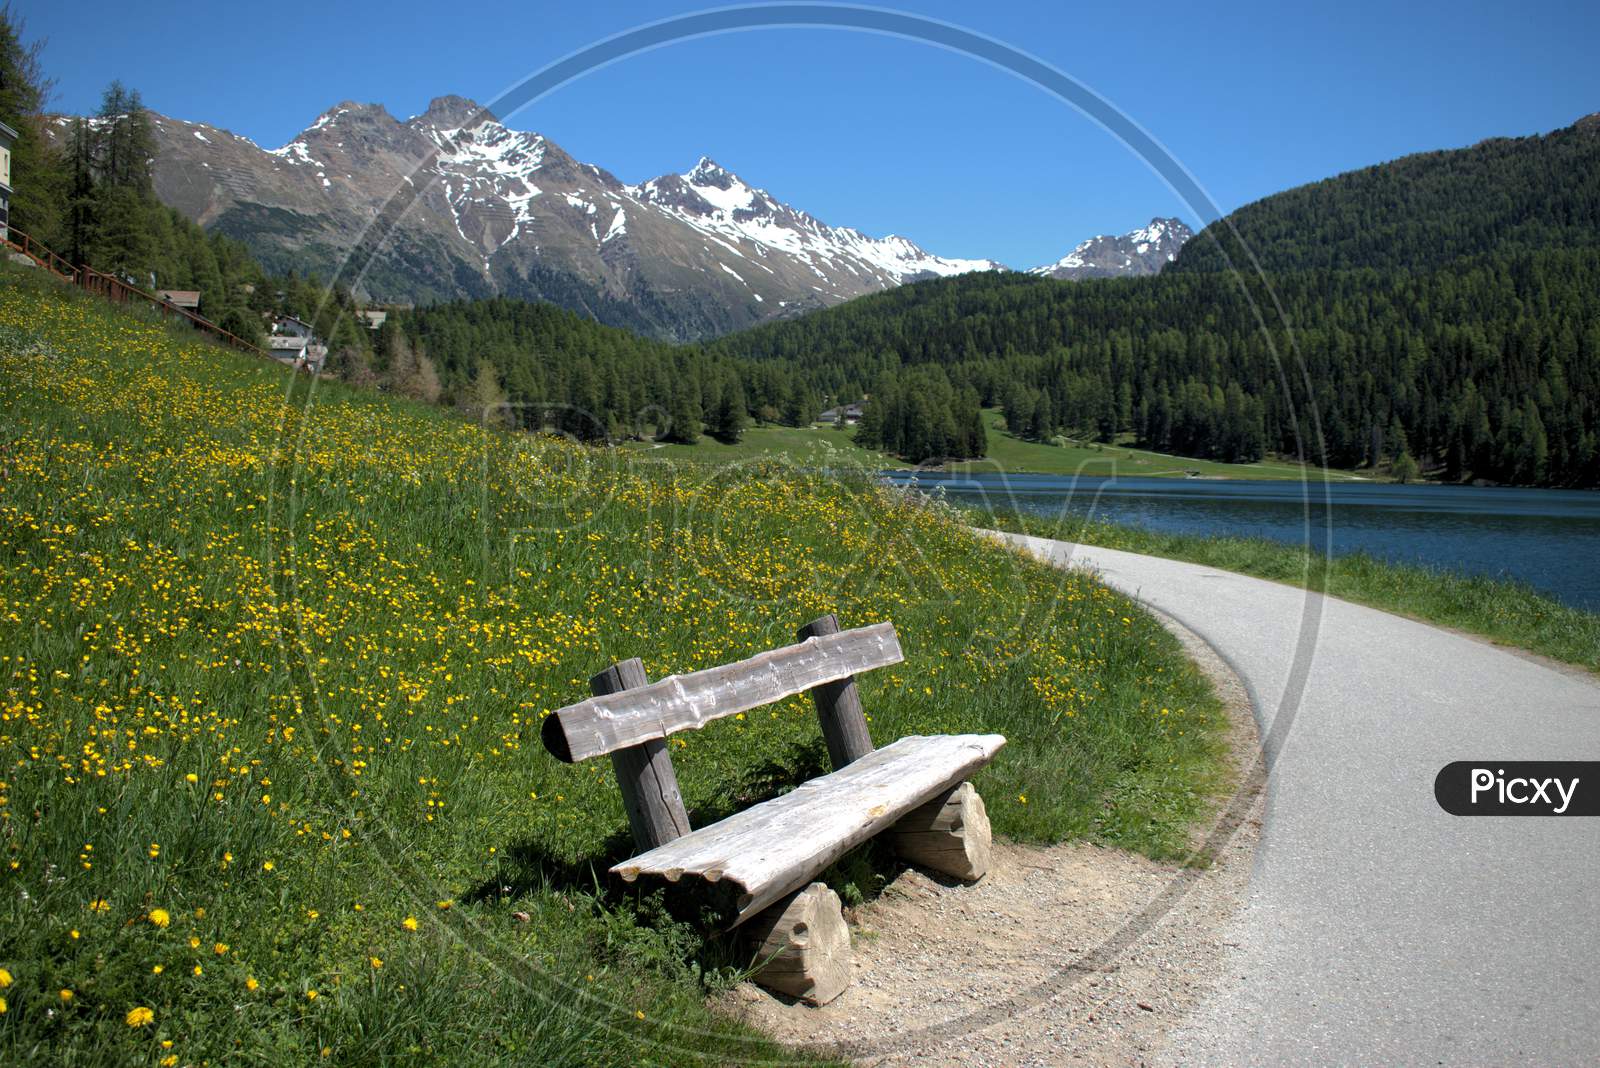 Empty bench a the lake in Saint Moritz Switzerland 27.5.2020